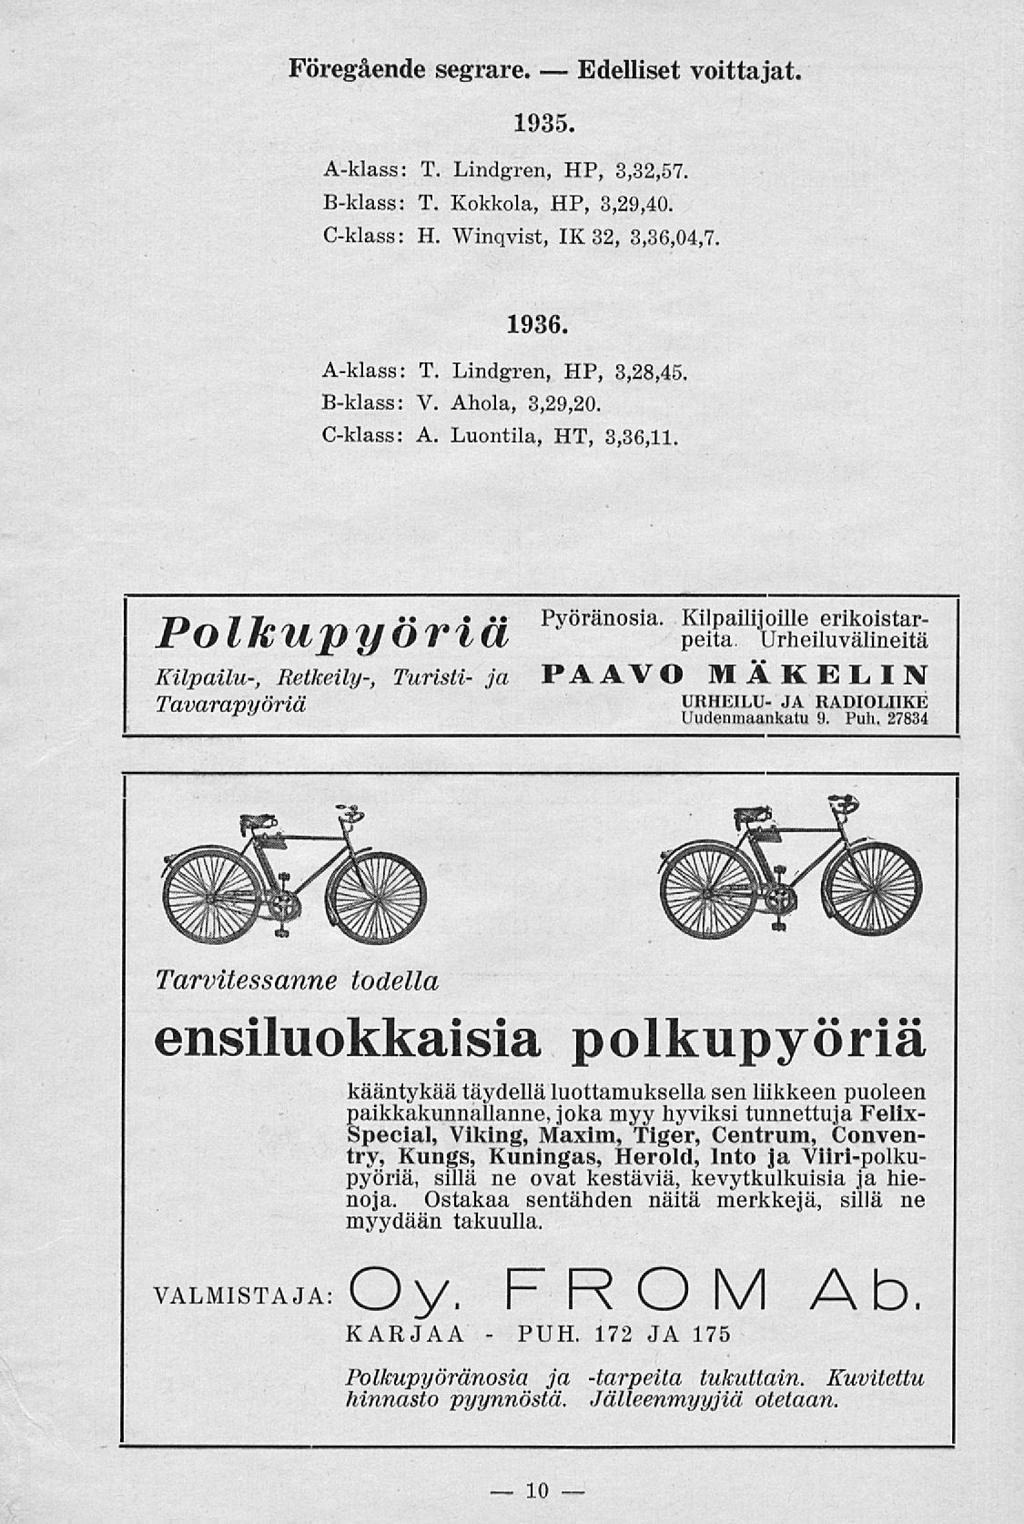 PUH. Edelliset Föregående segrare. voittajat. 1935. A-klass: T. Lindgren,, 3,32,57. B-klass: T. Kokkola,, 3,29,40. C-klass: H. Winqvist, IX 32, 3,36,04,7. 1936. A-klass: T. Lindgren,, 3,28,45.